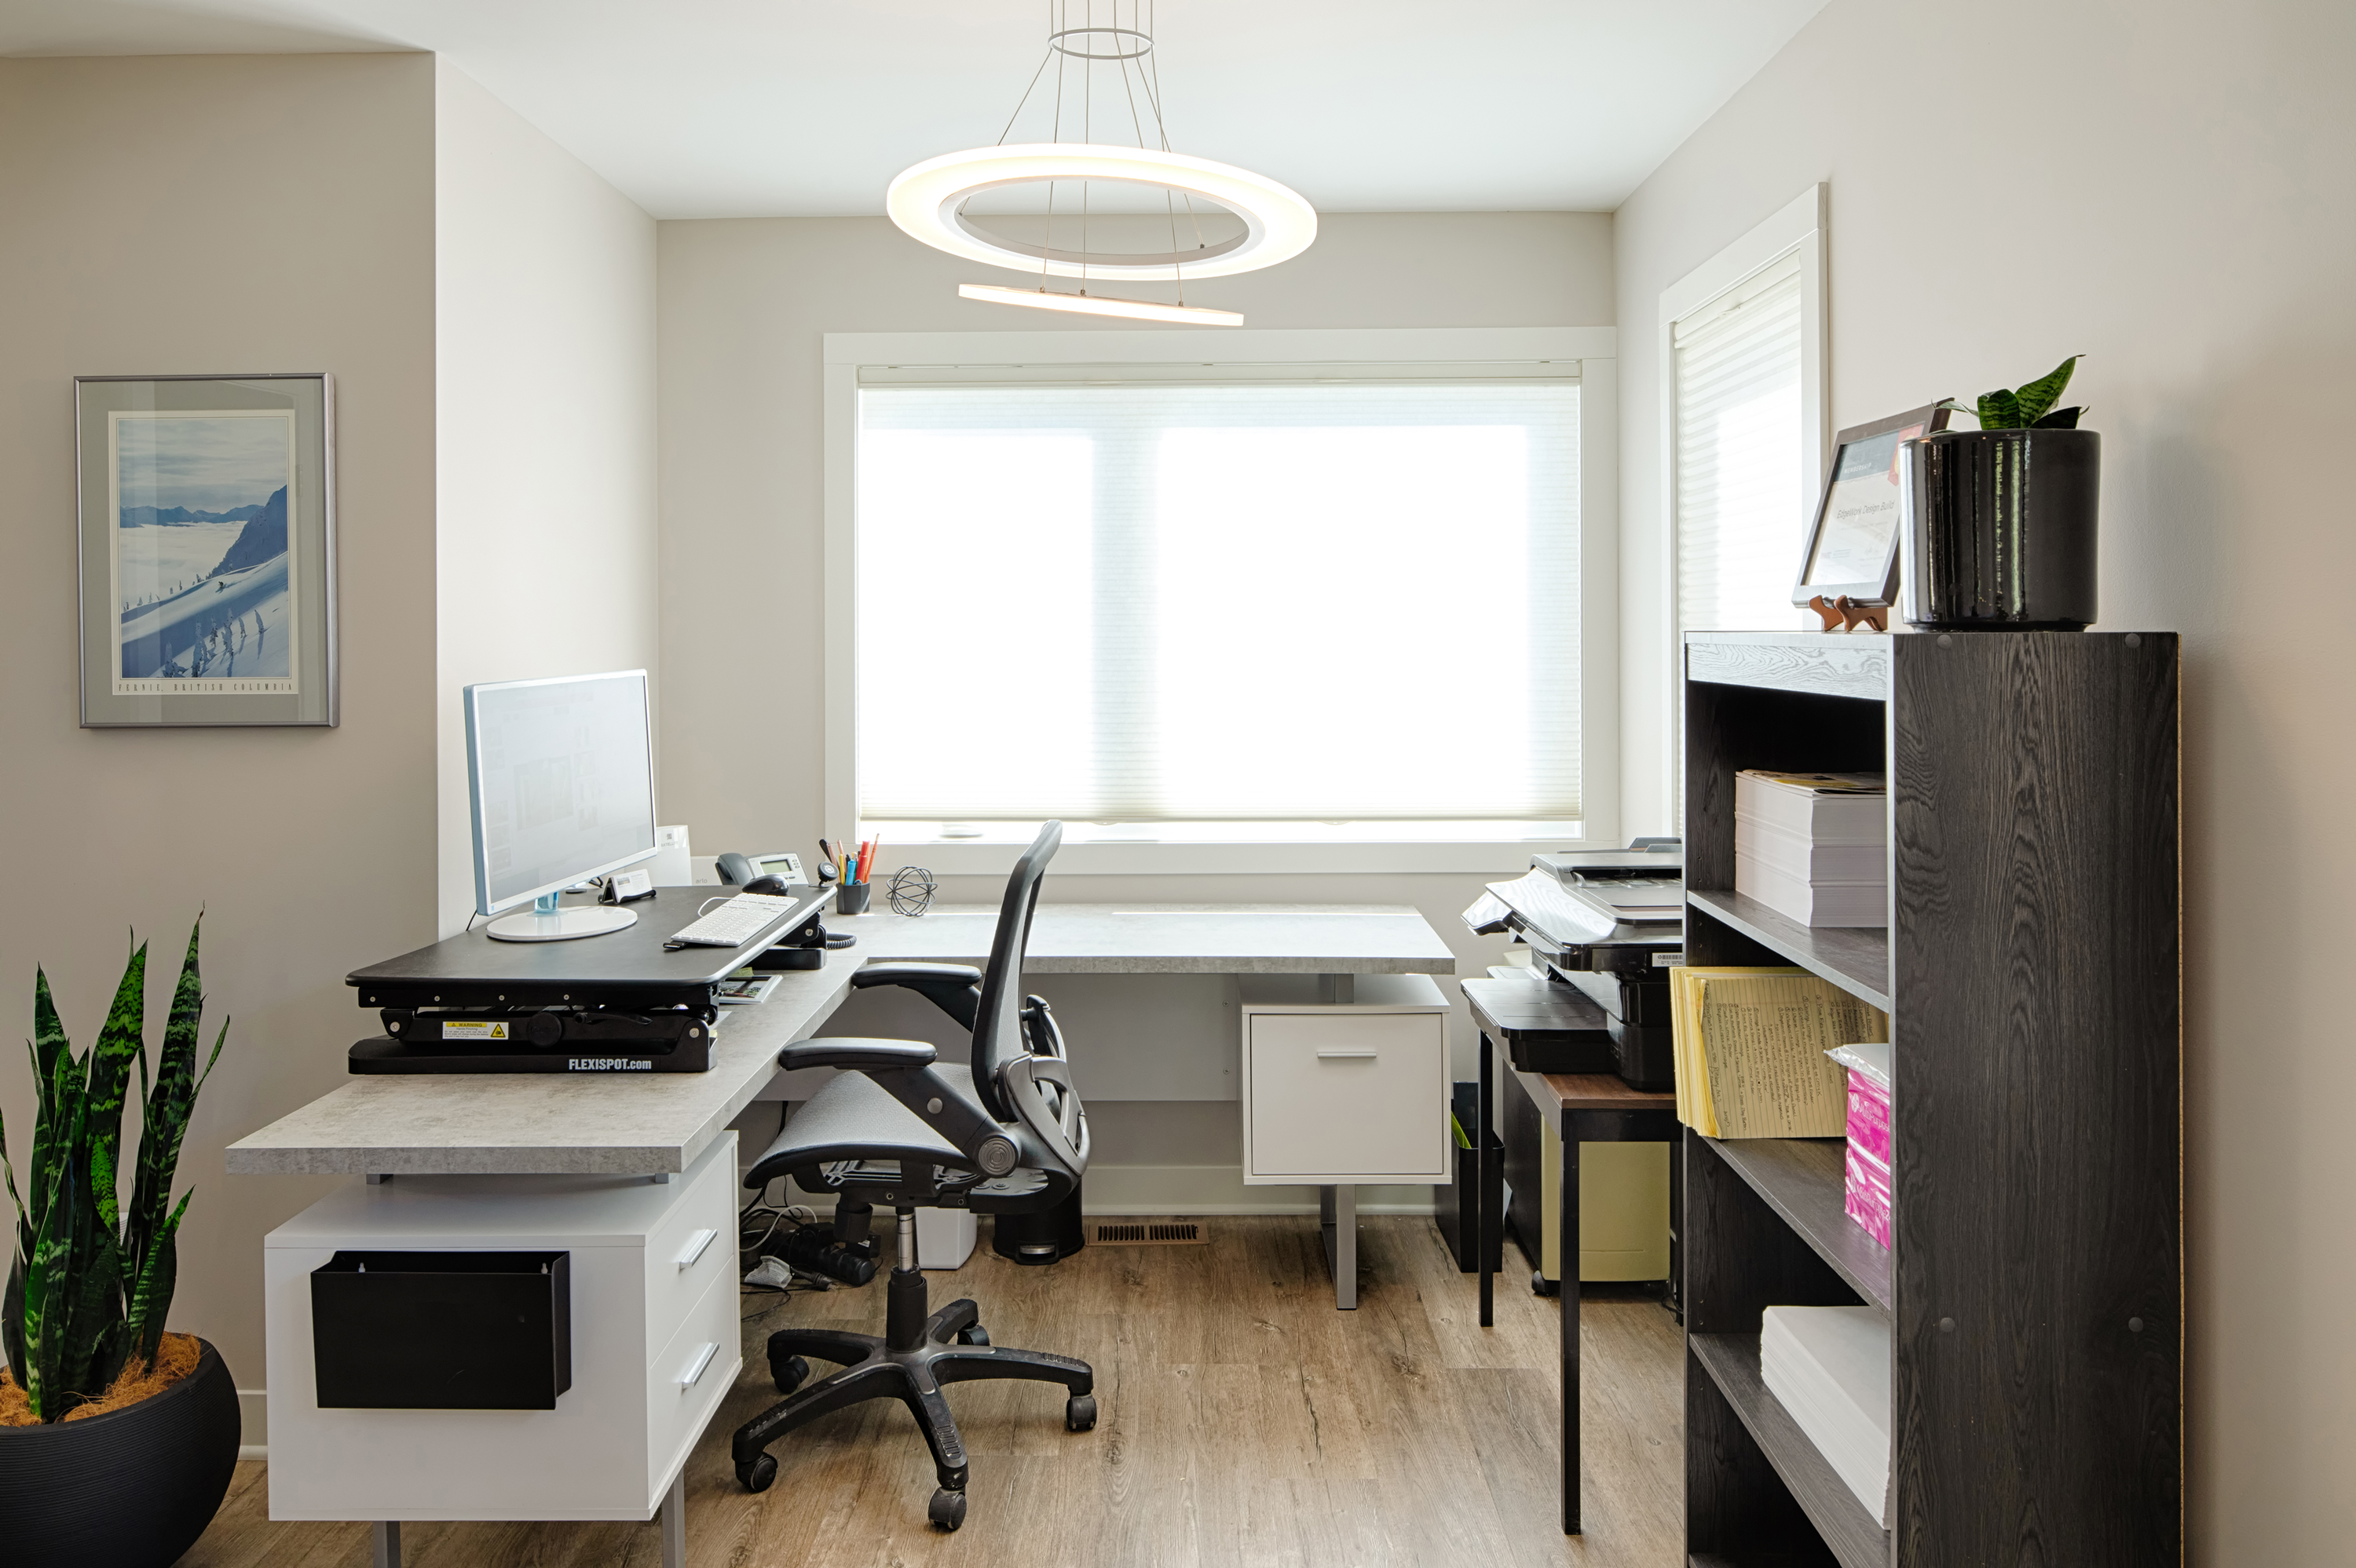 Office space in alternative dwelling unit